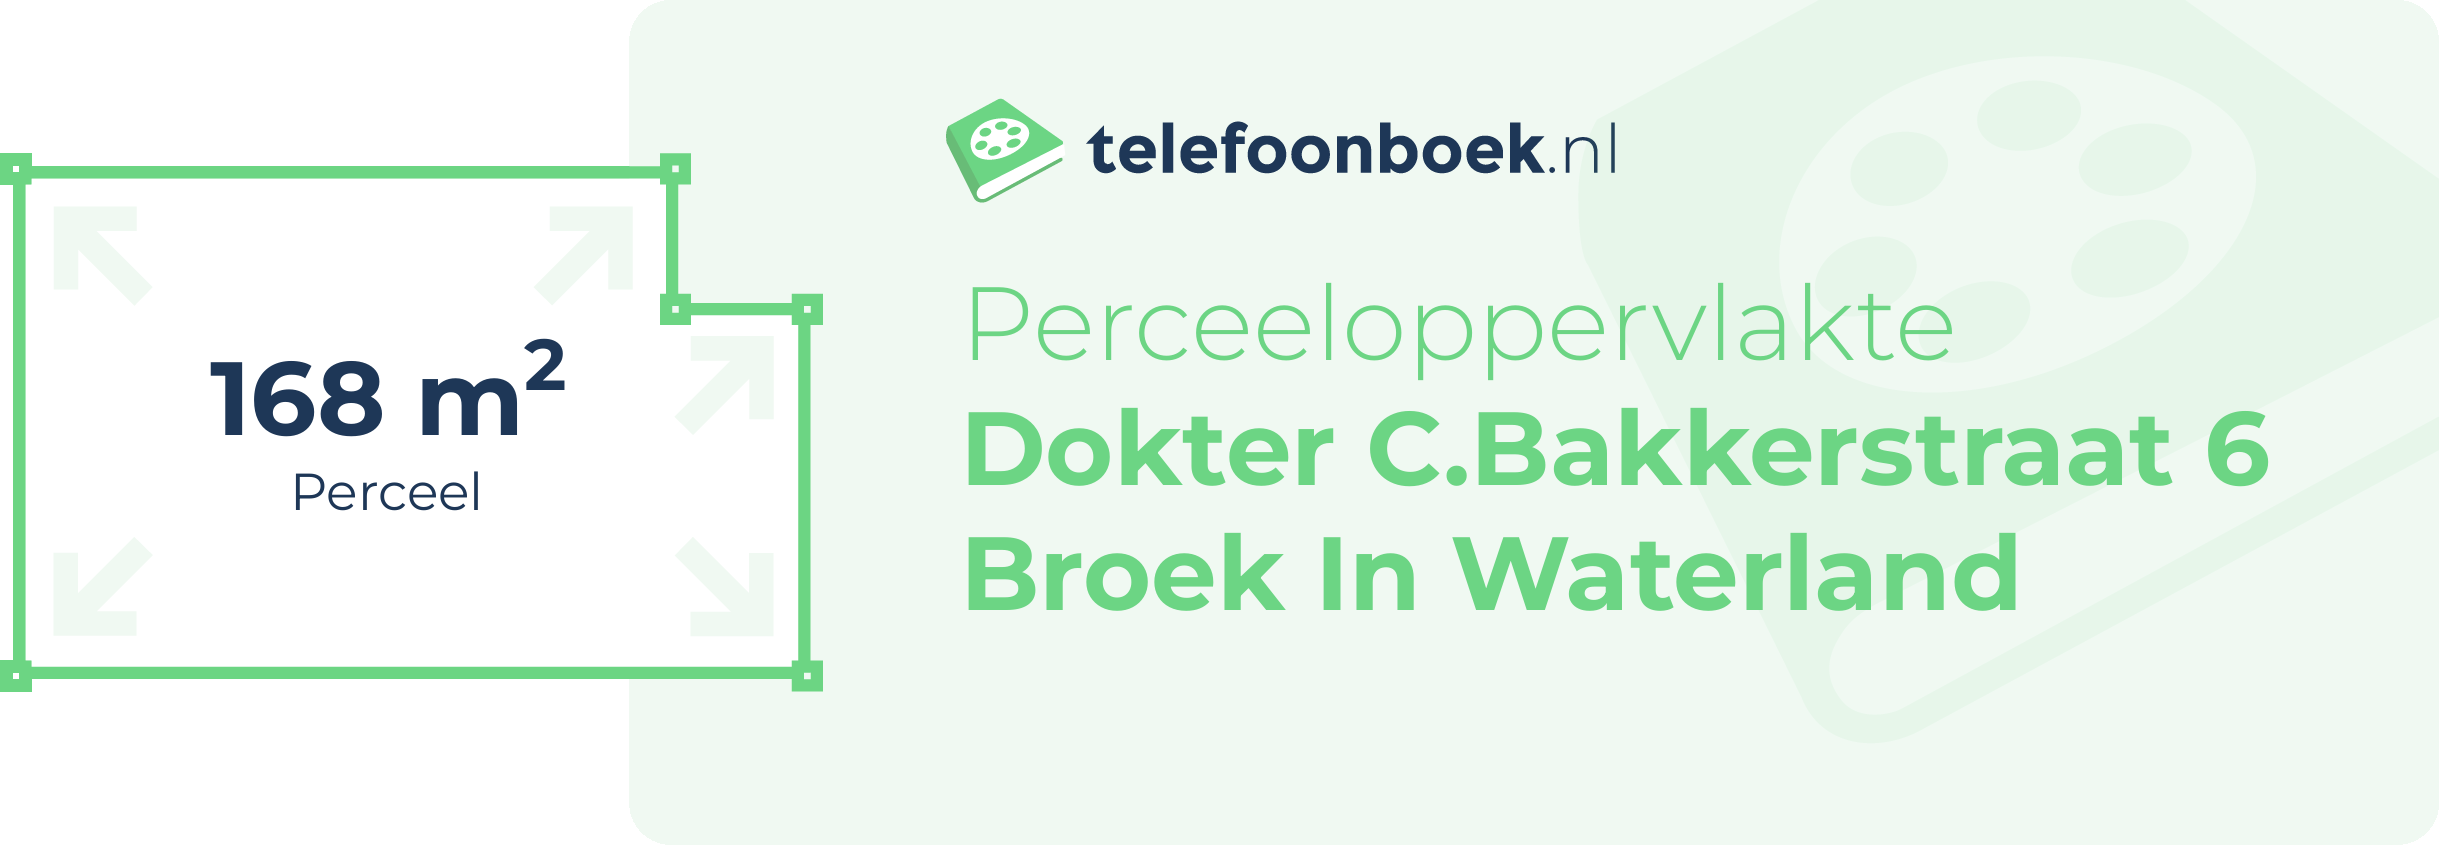 Perceeloppervlakte Dokter C.Bakkerstraat 6 Broek In Waterland